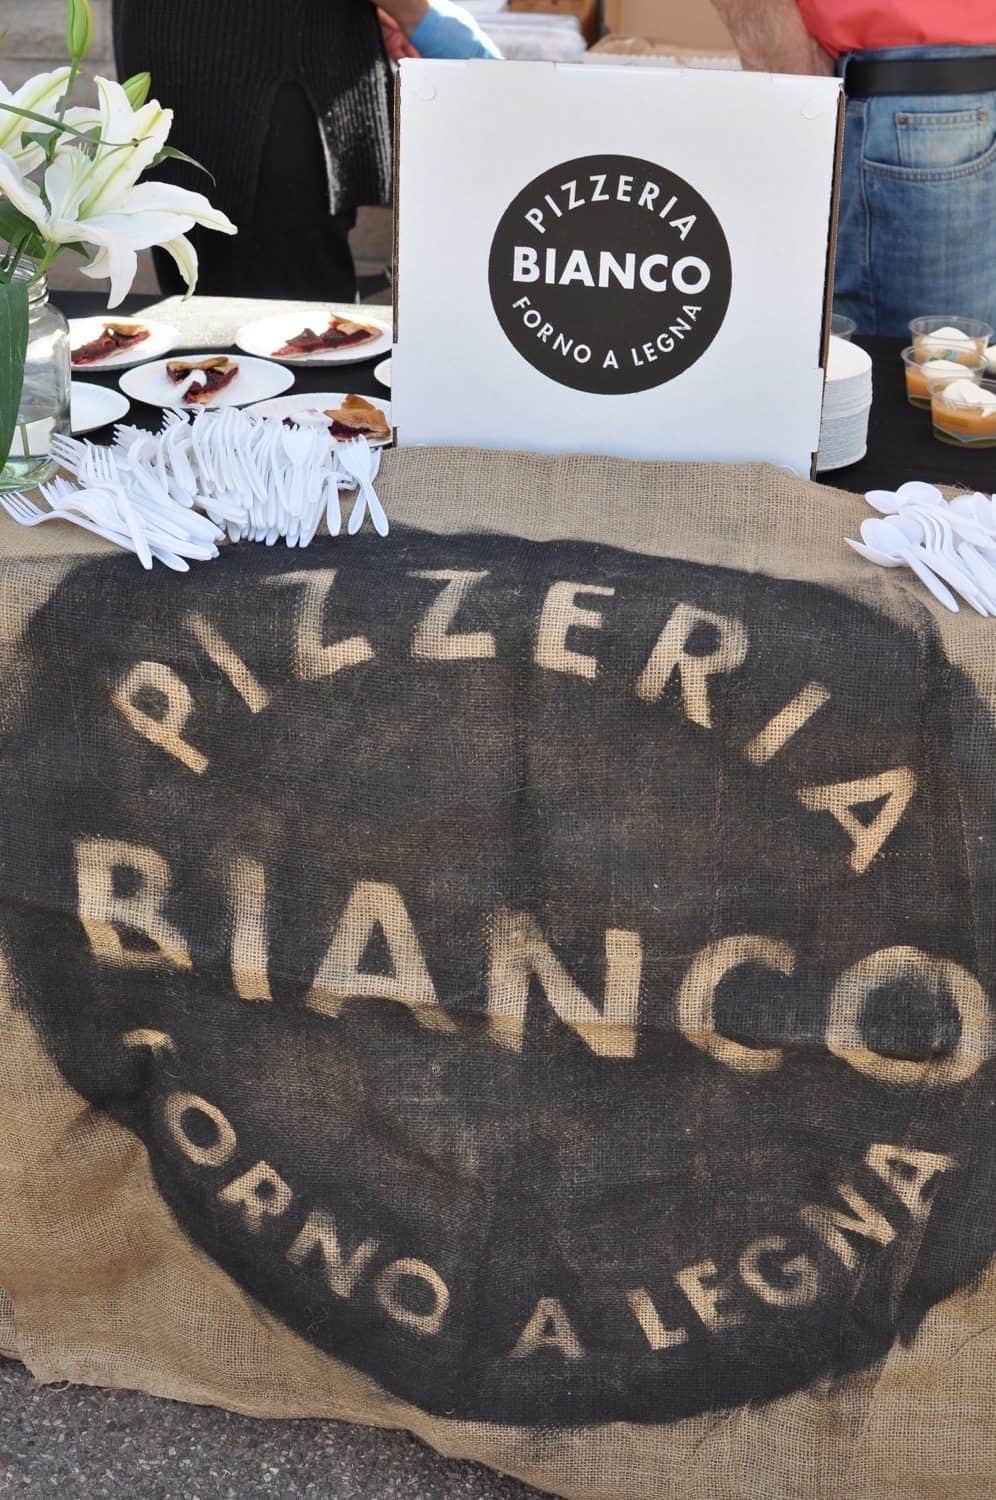 Pizzeria Bianco at Savor Food & Wine Festival